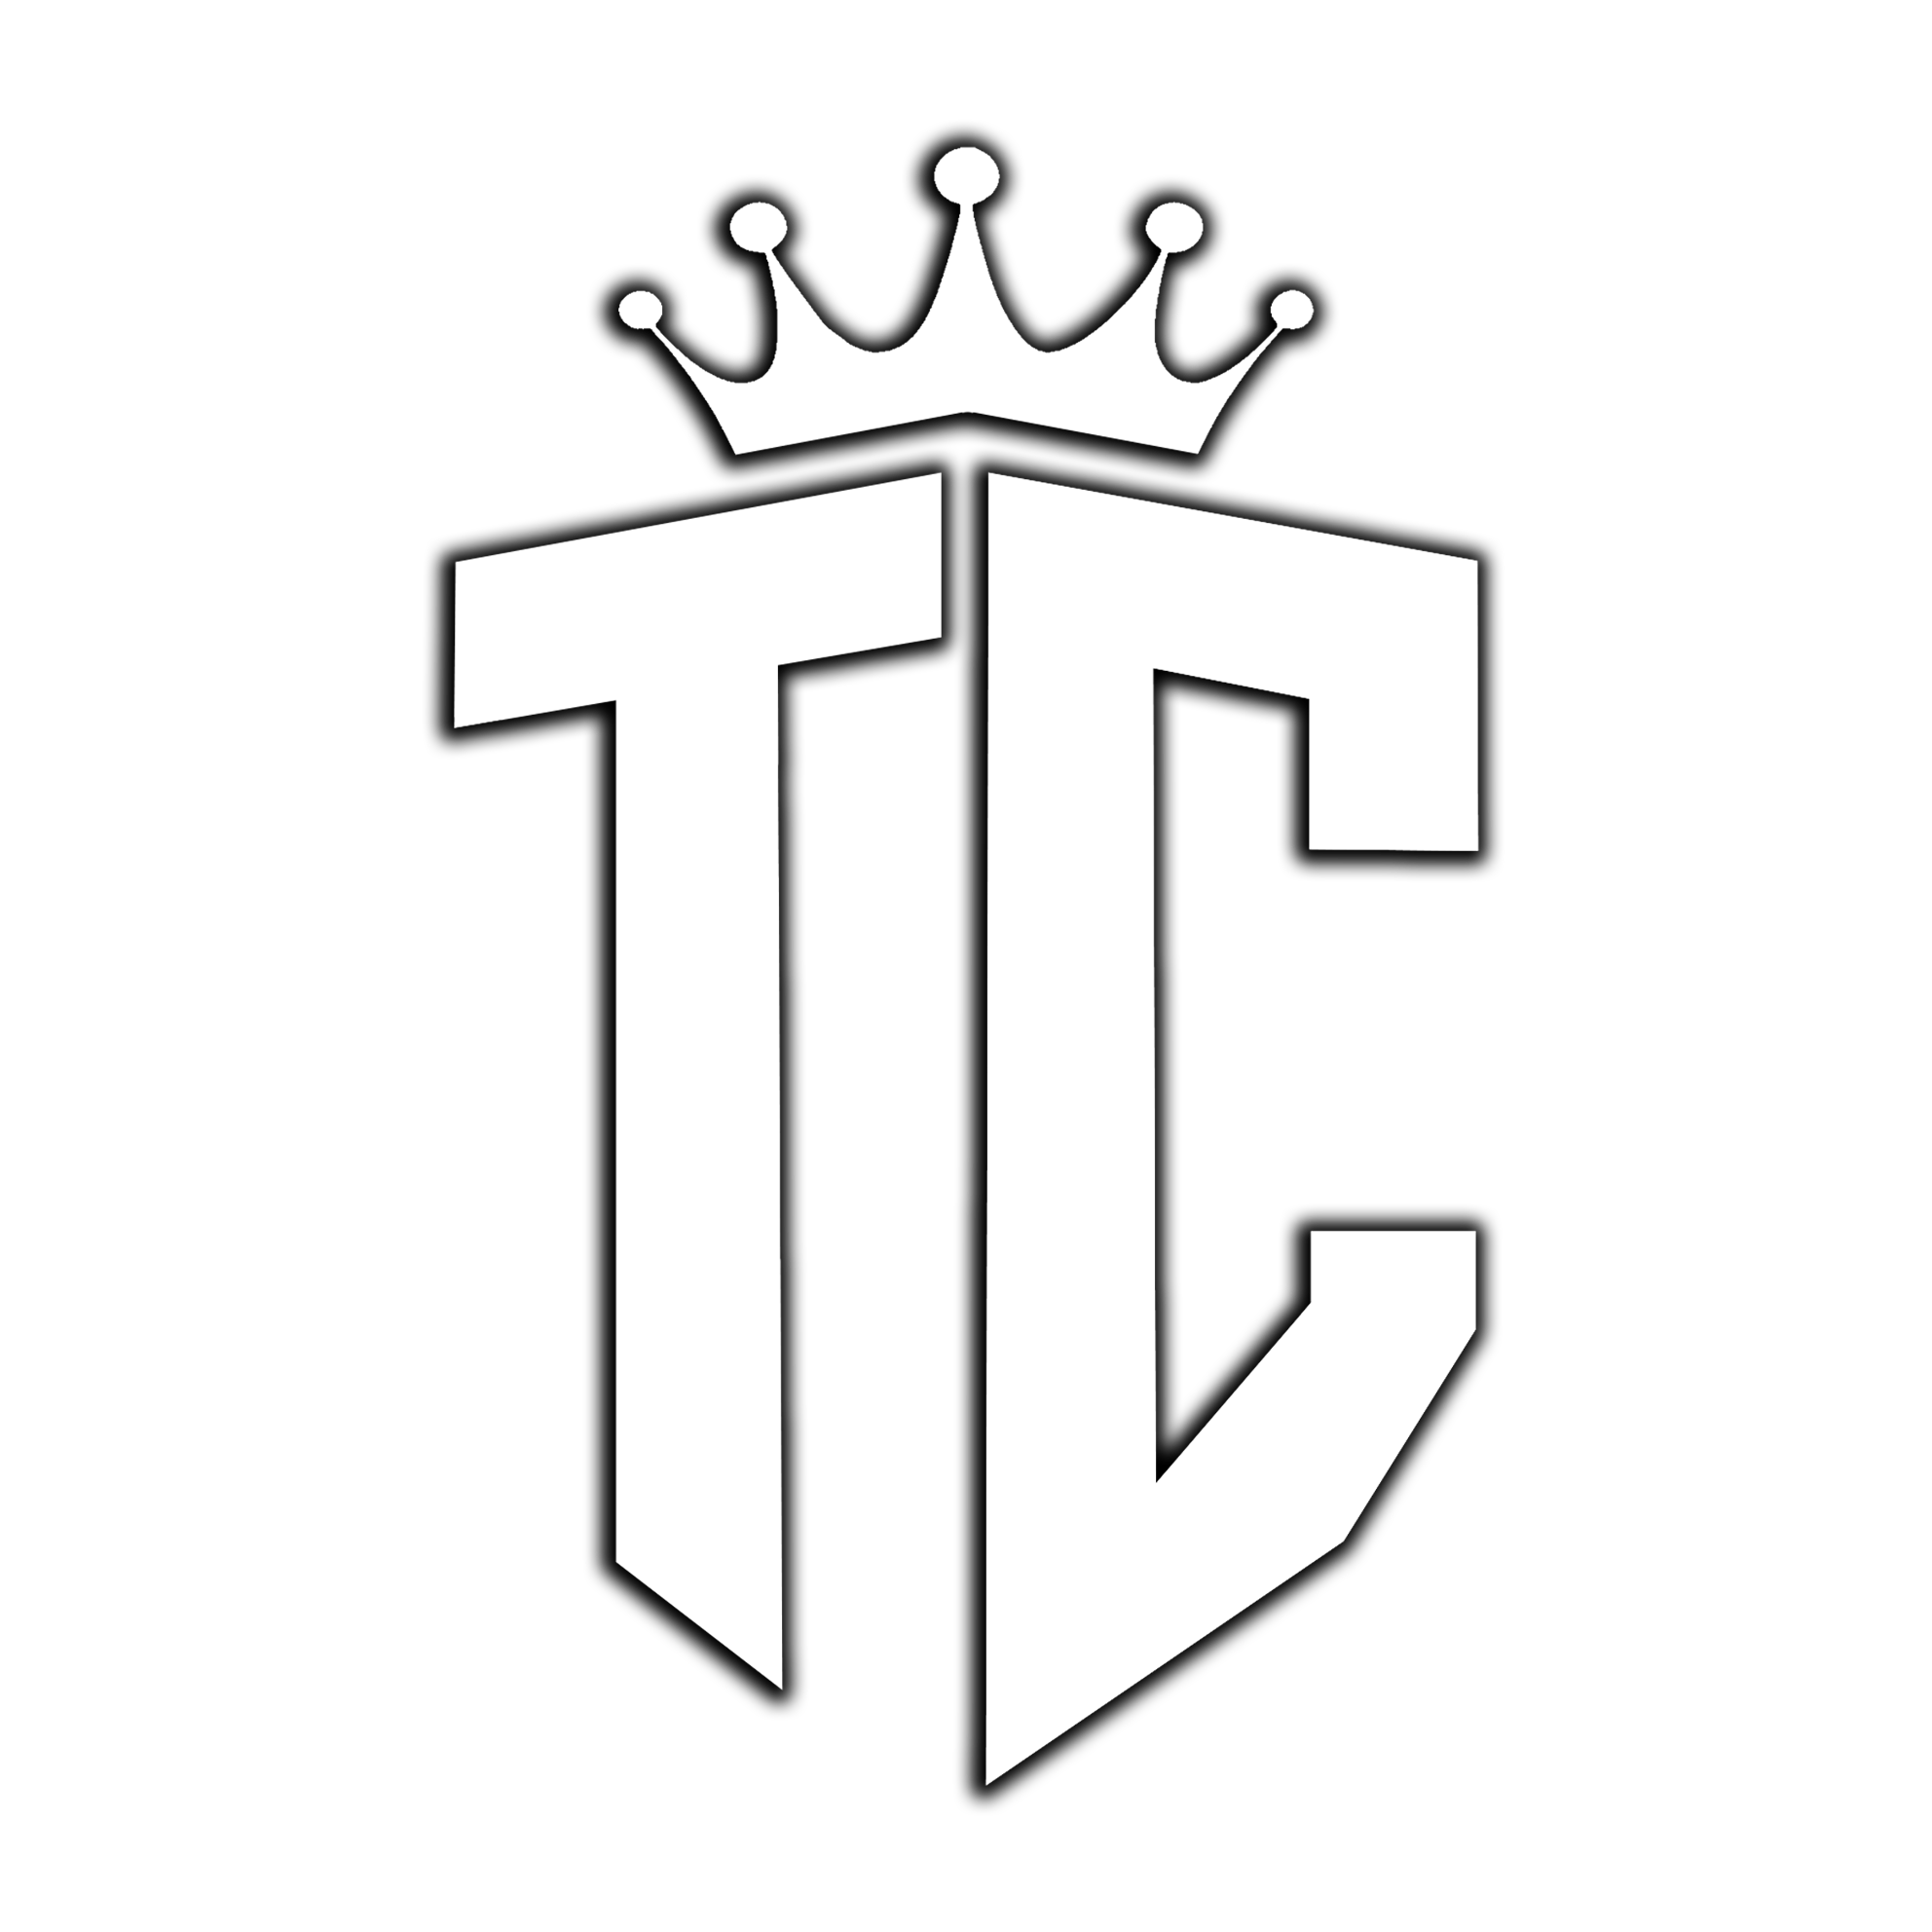 Tuga Clan (Delta/Charlie) team logo